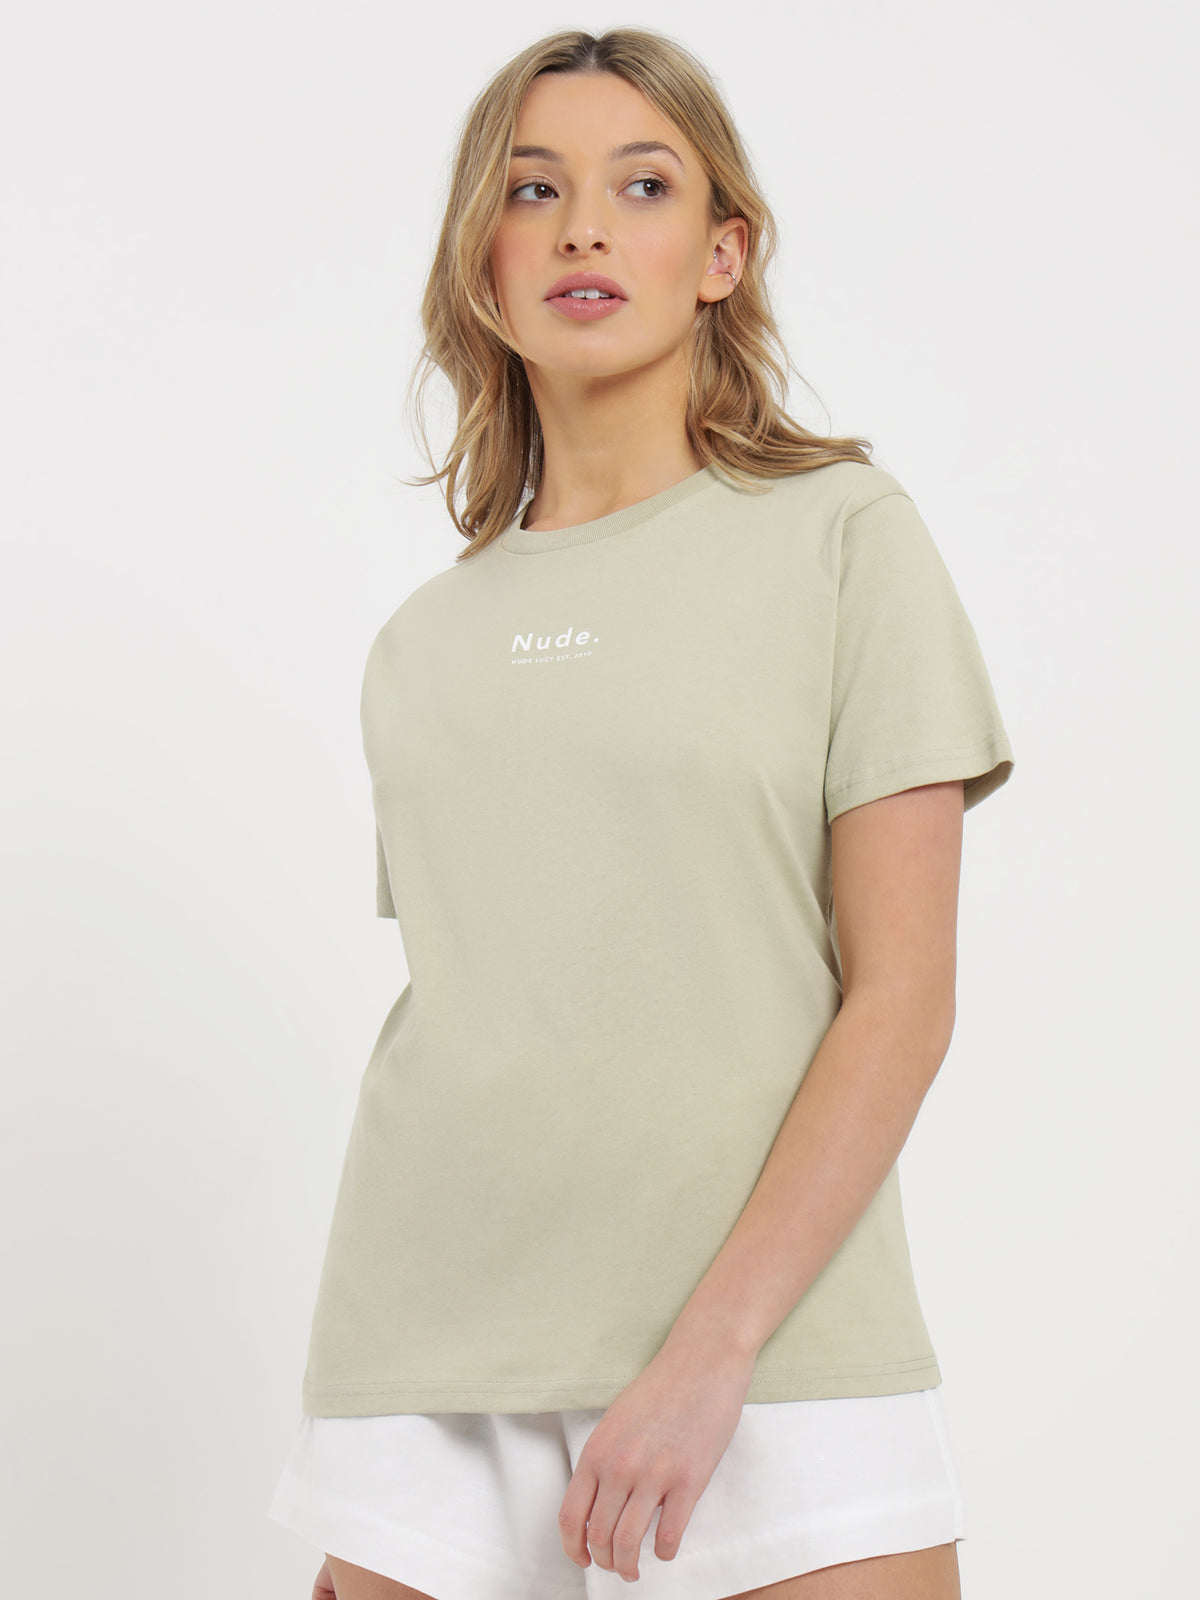 Nude Organic Hemp T-Shirt in Eucalyptus